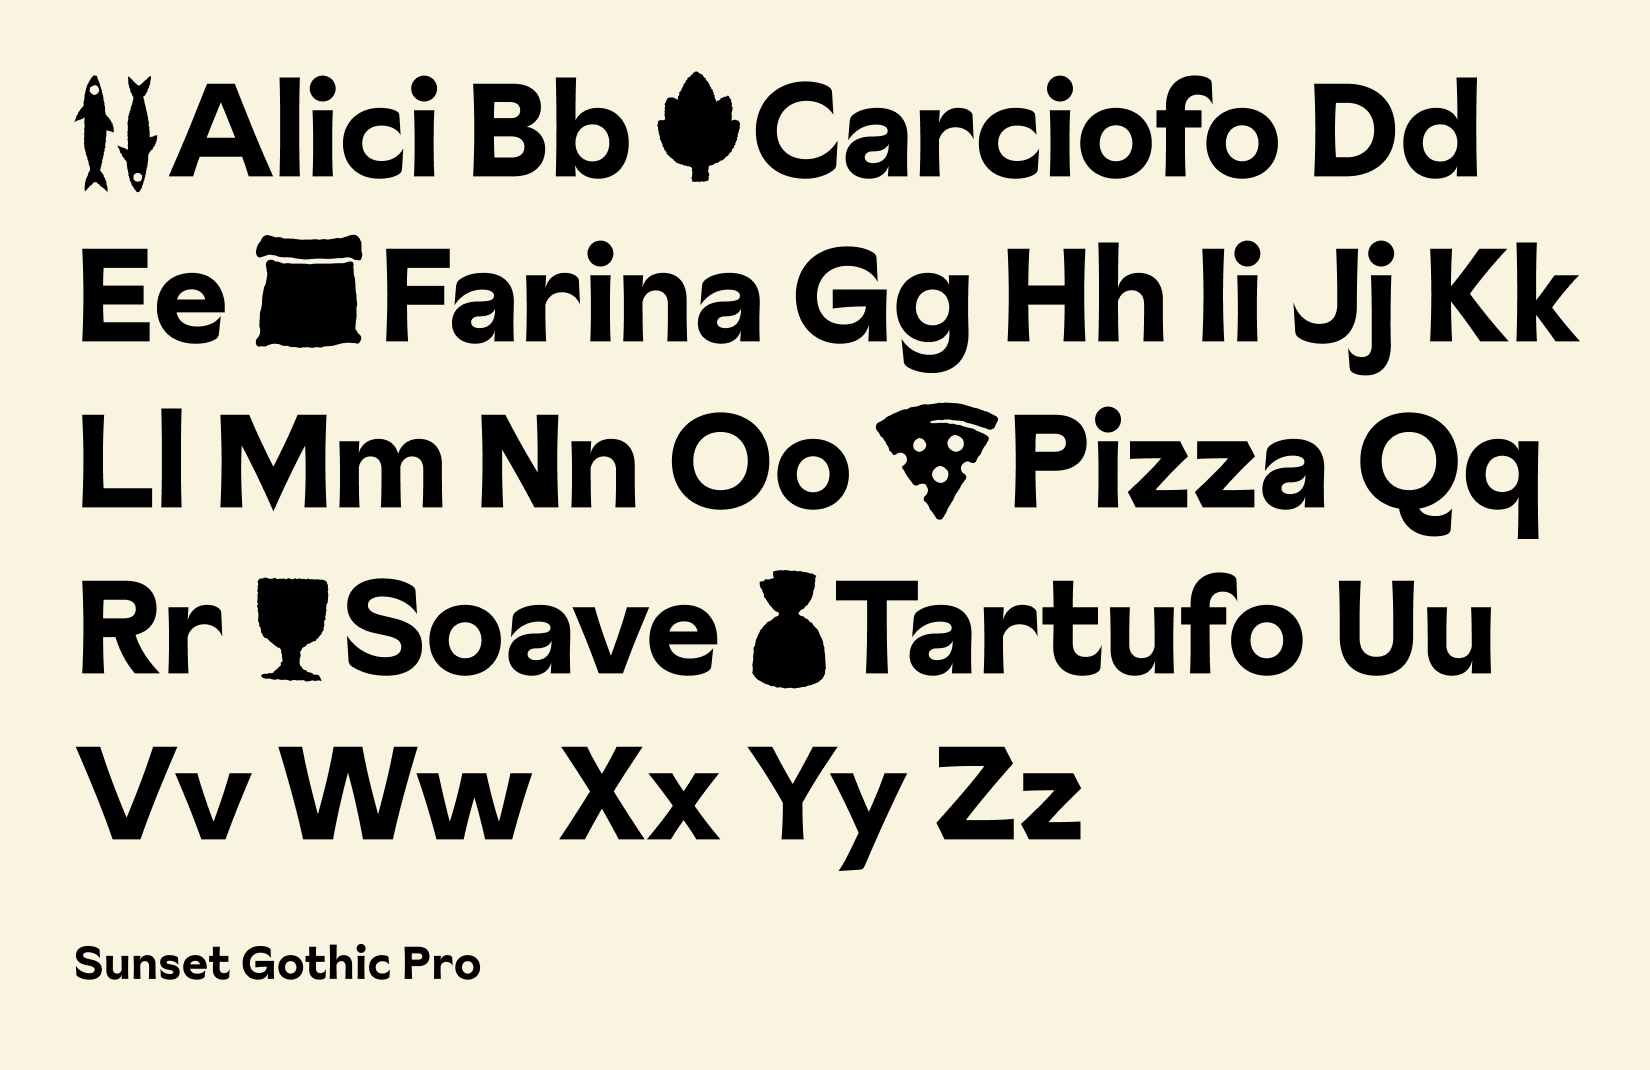 Logotype, brand identity and art direction by London-based design studio Koto for German online retailer of Italian food stuffs Gustini